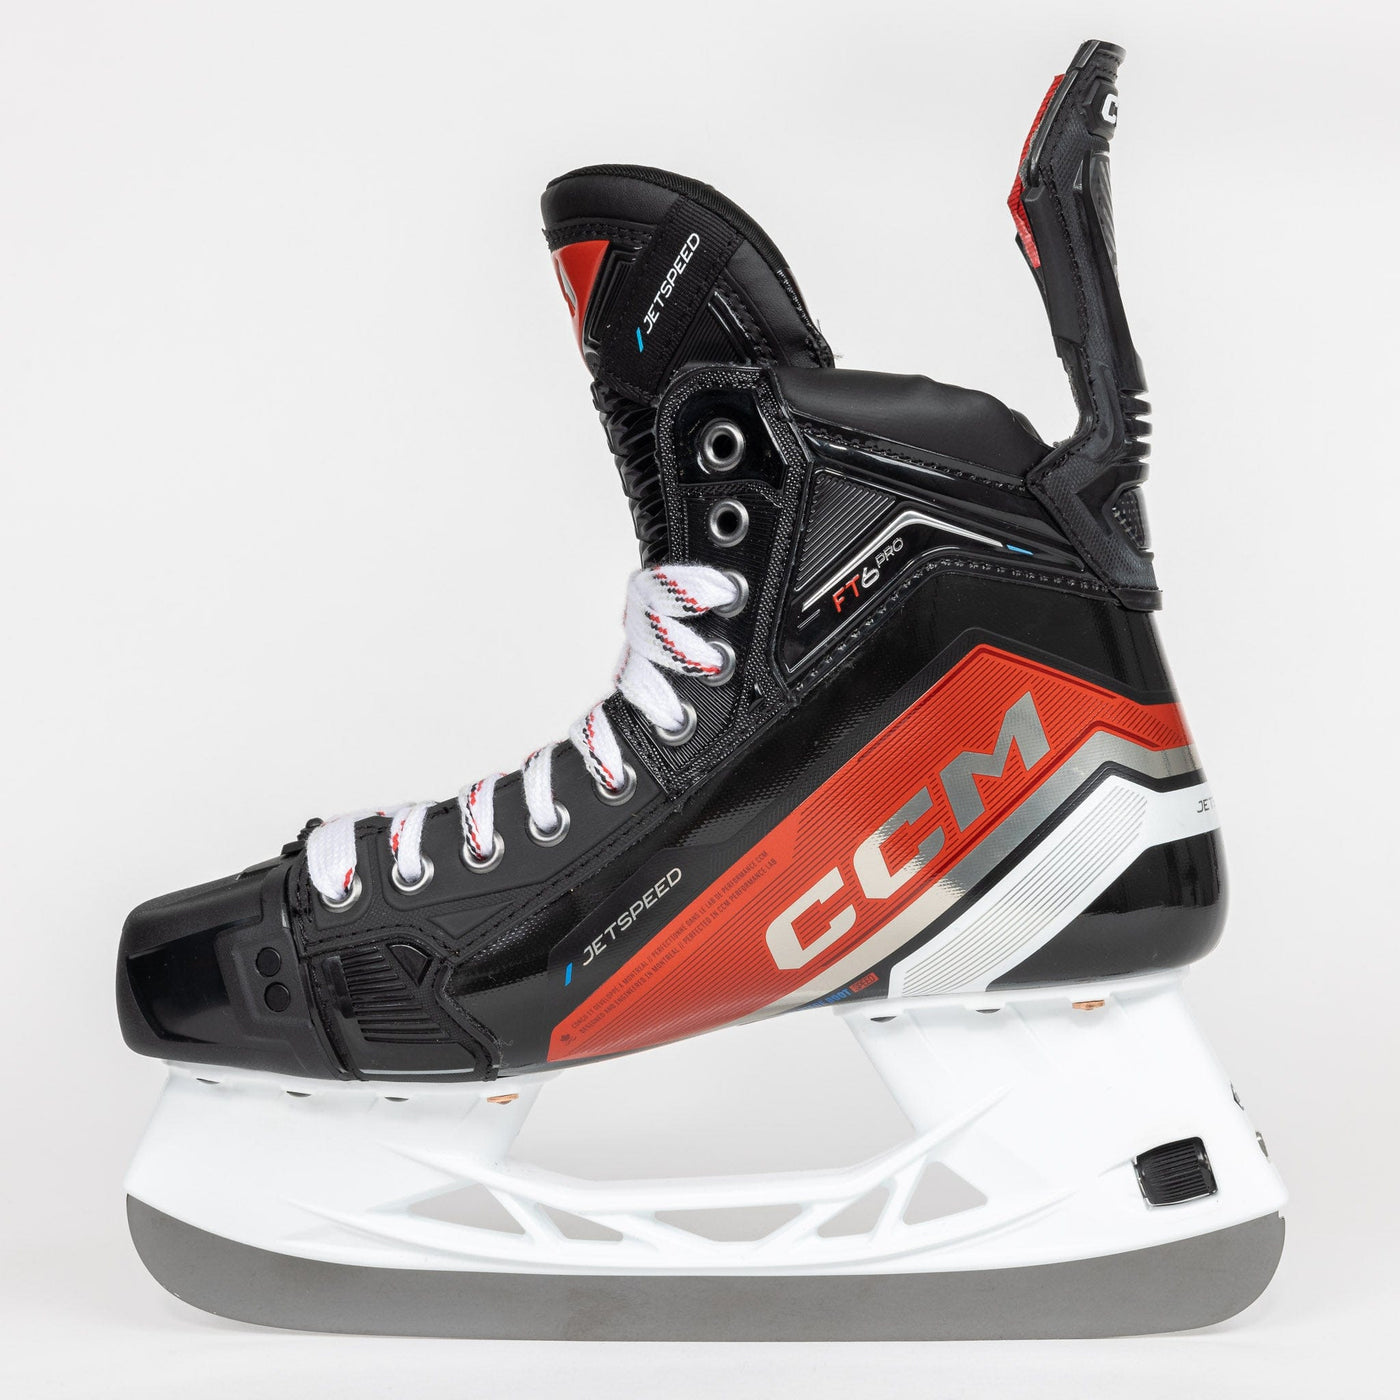 CCM Jetspeed FT6 Pro Senior Hockey Skates - The Hockey Shop Source For Sports